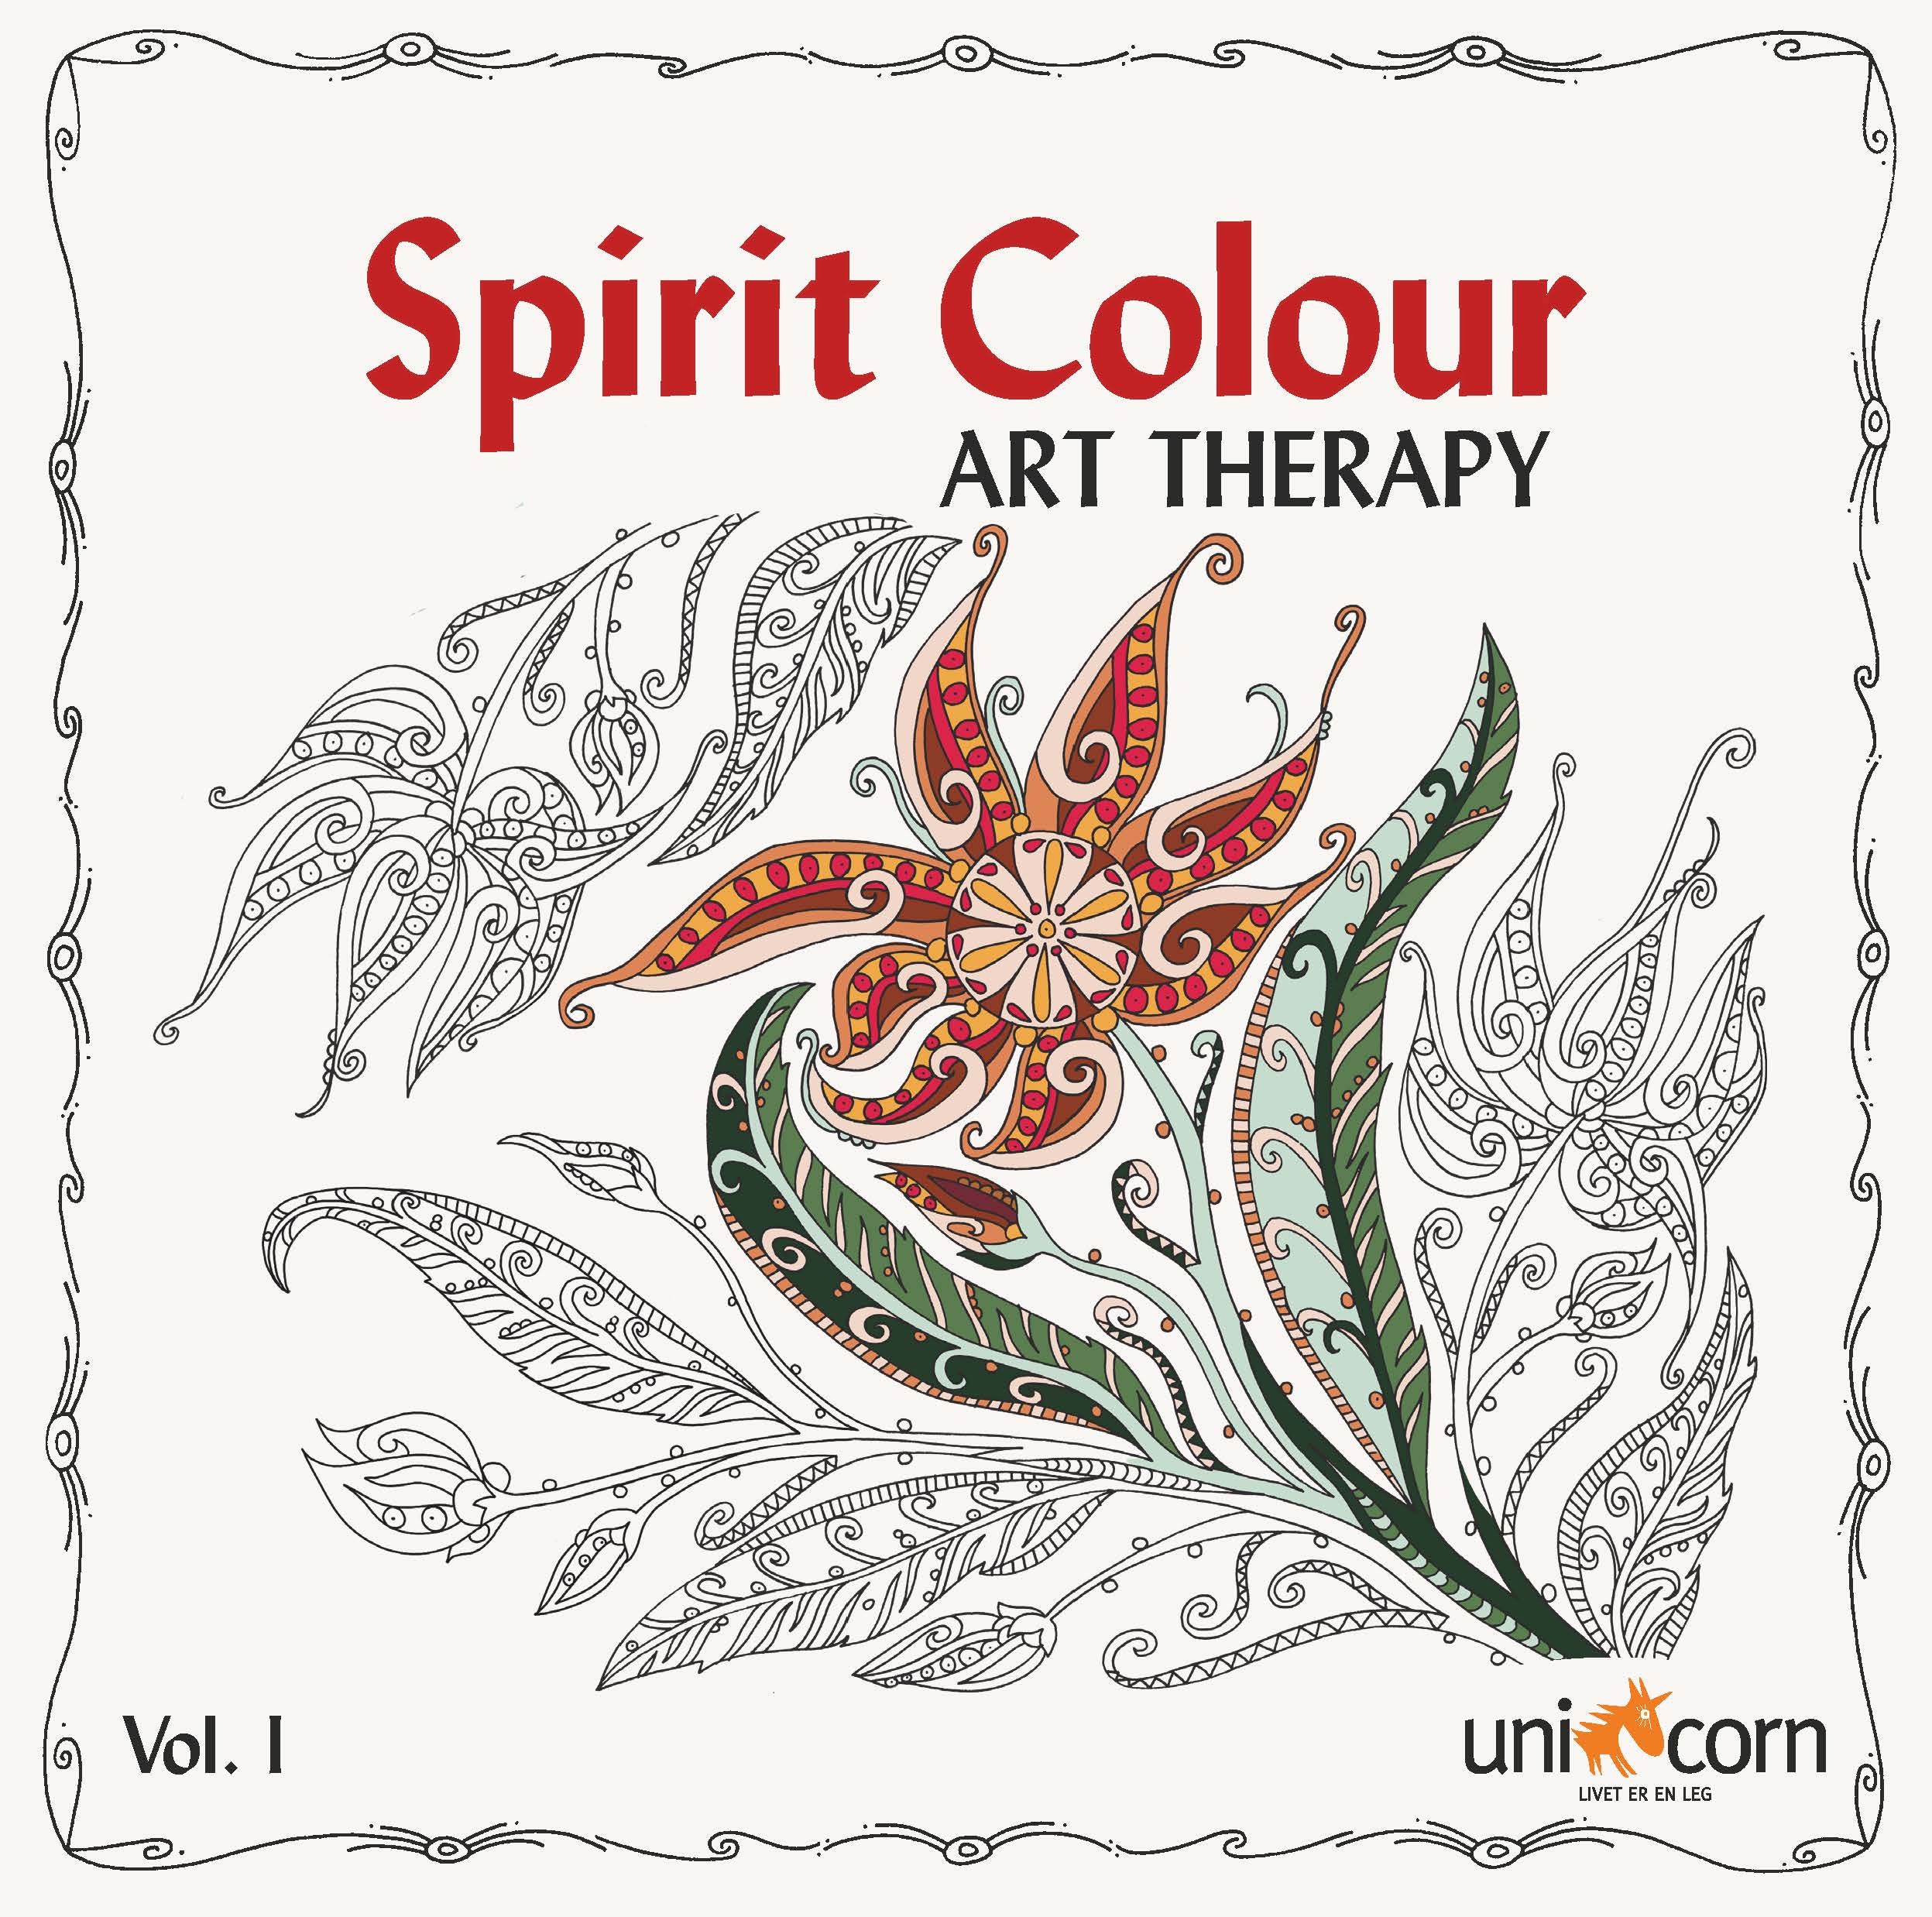 571-35-16000-70-3 Spirit Colour Art Therapy Vol. I